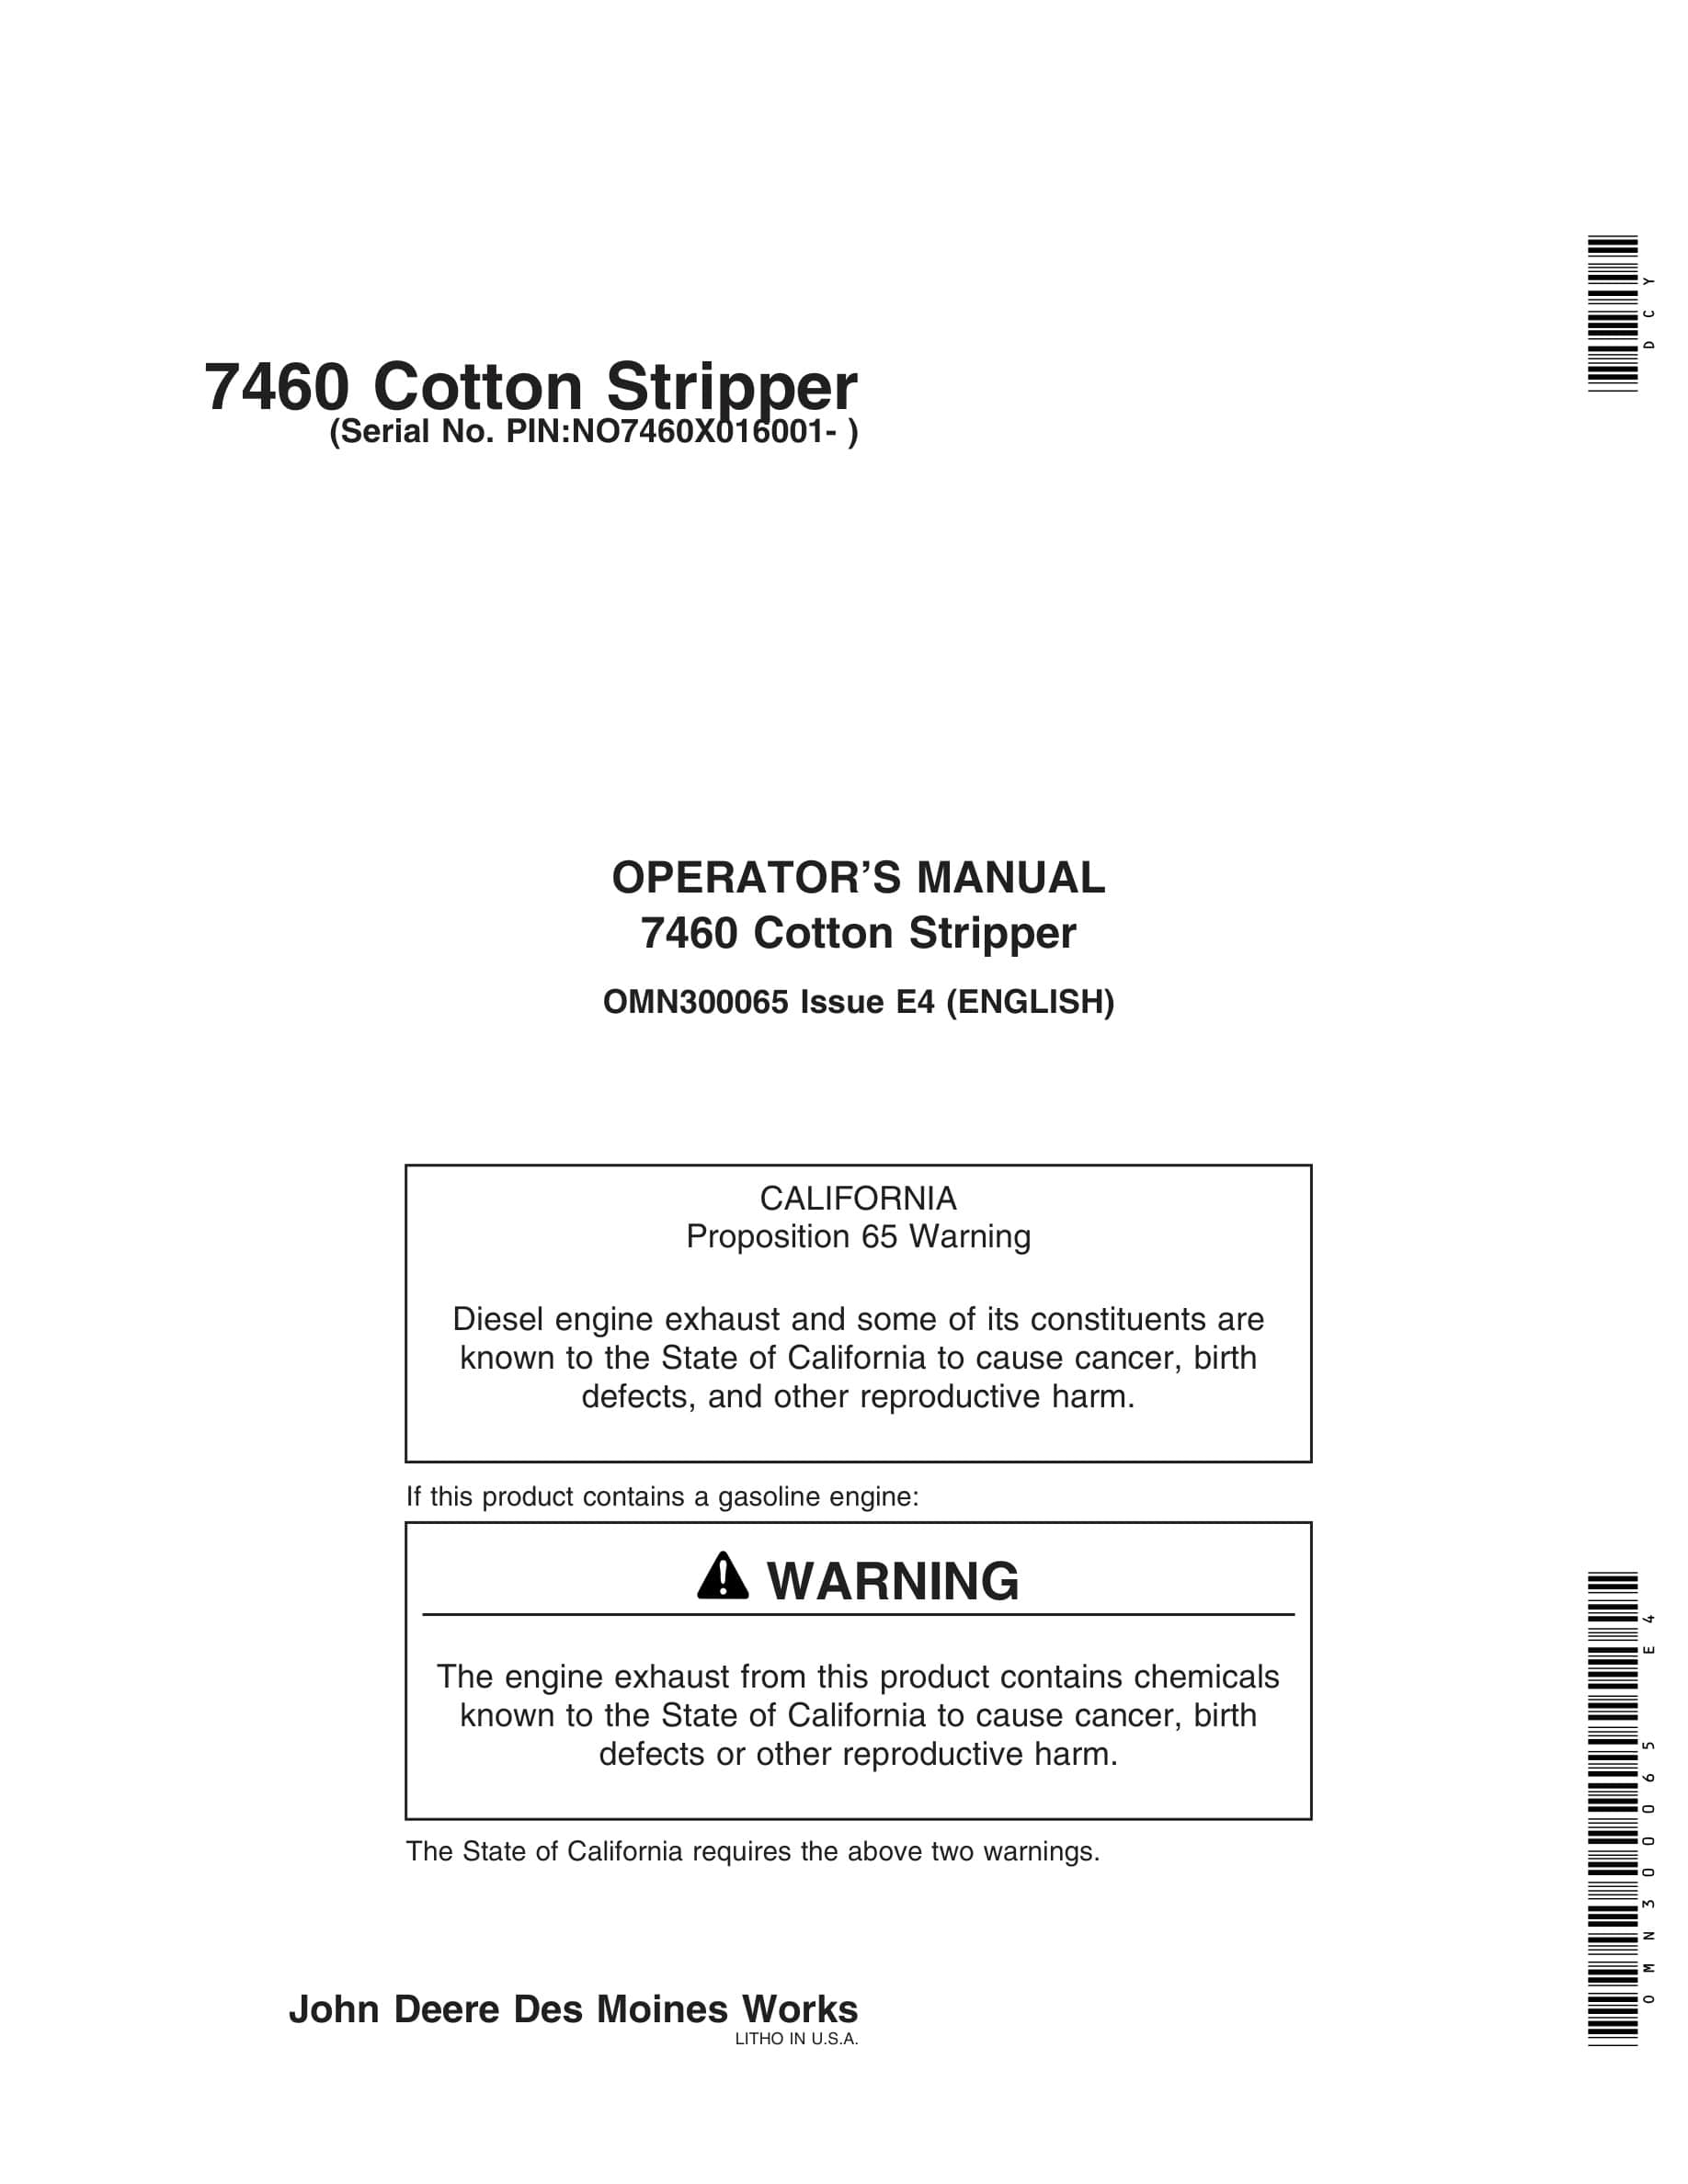 John Deere 7460 Cotton Stripper Operator Manual OMN300065-1